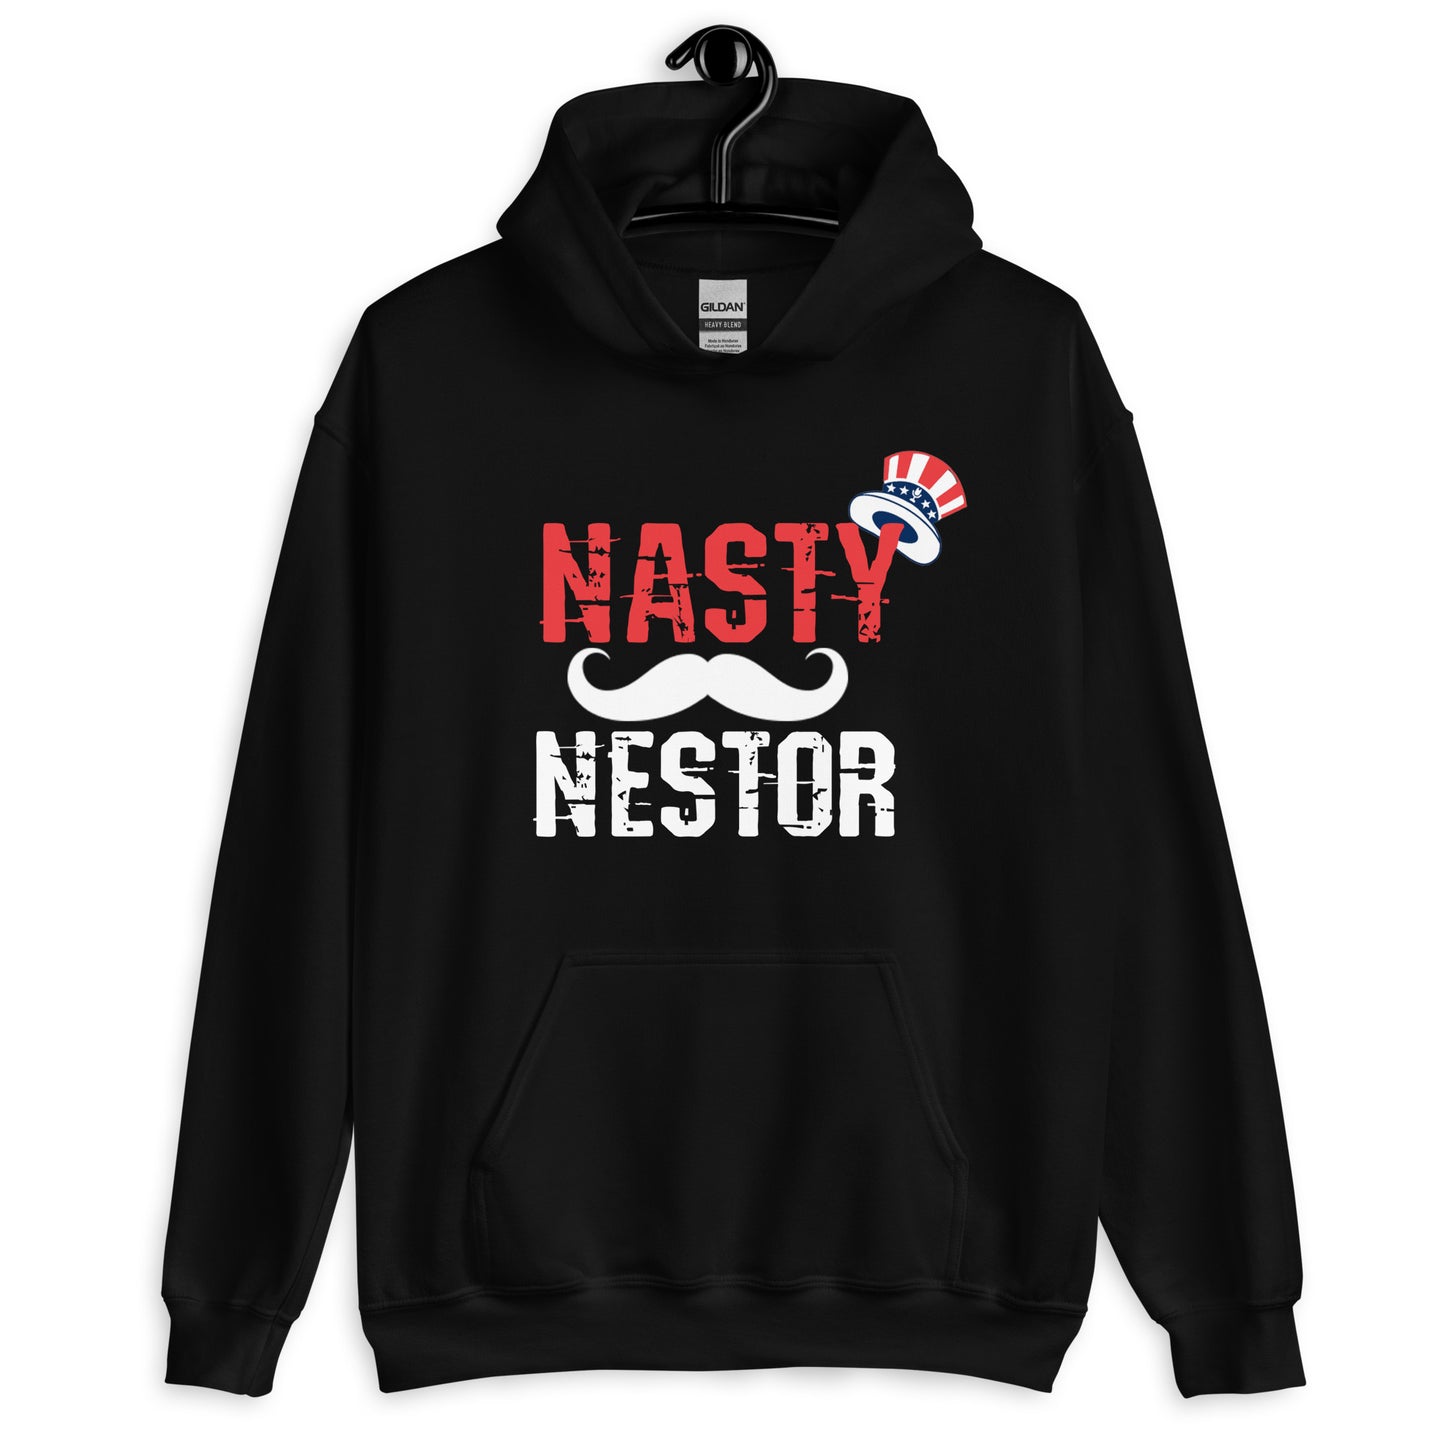 Nasty Nestor Unisex Hoodie